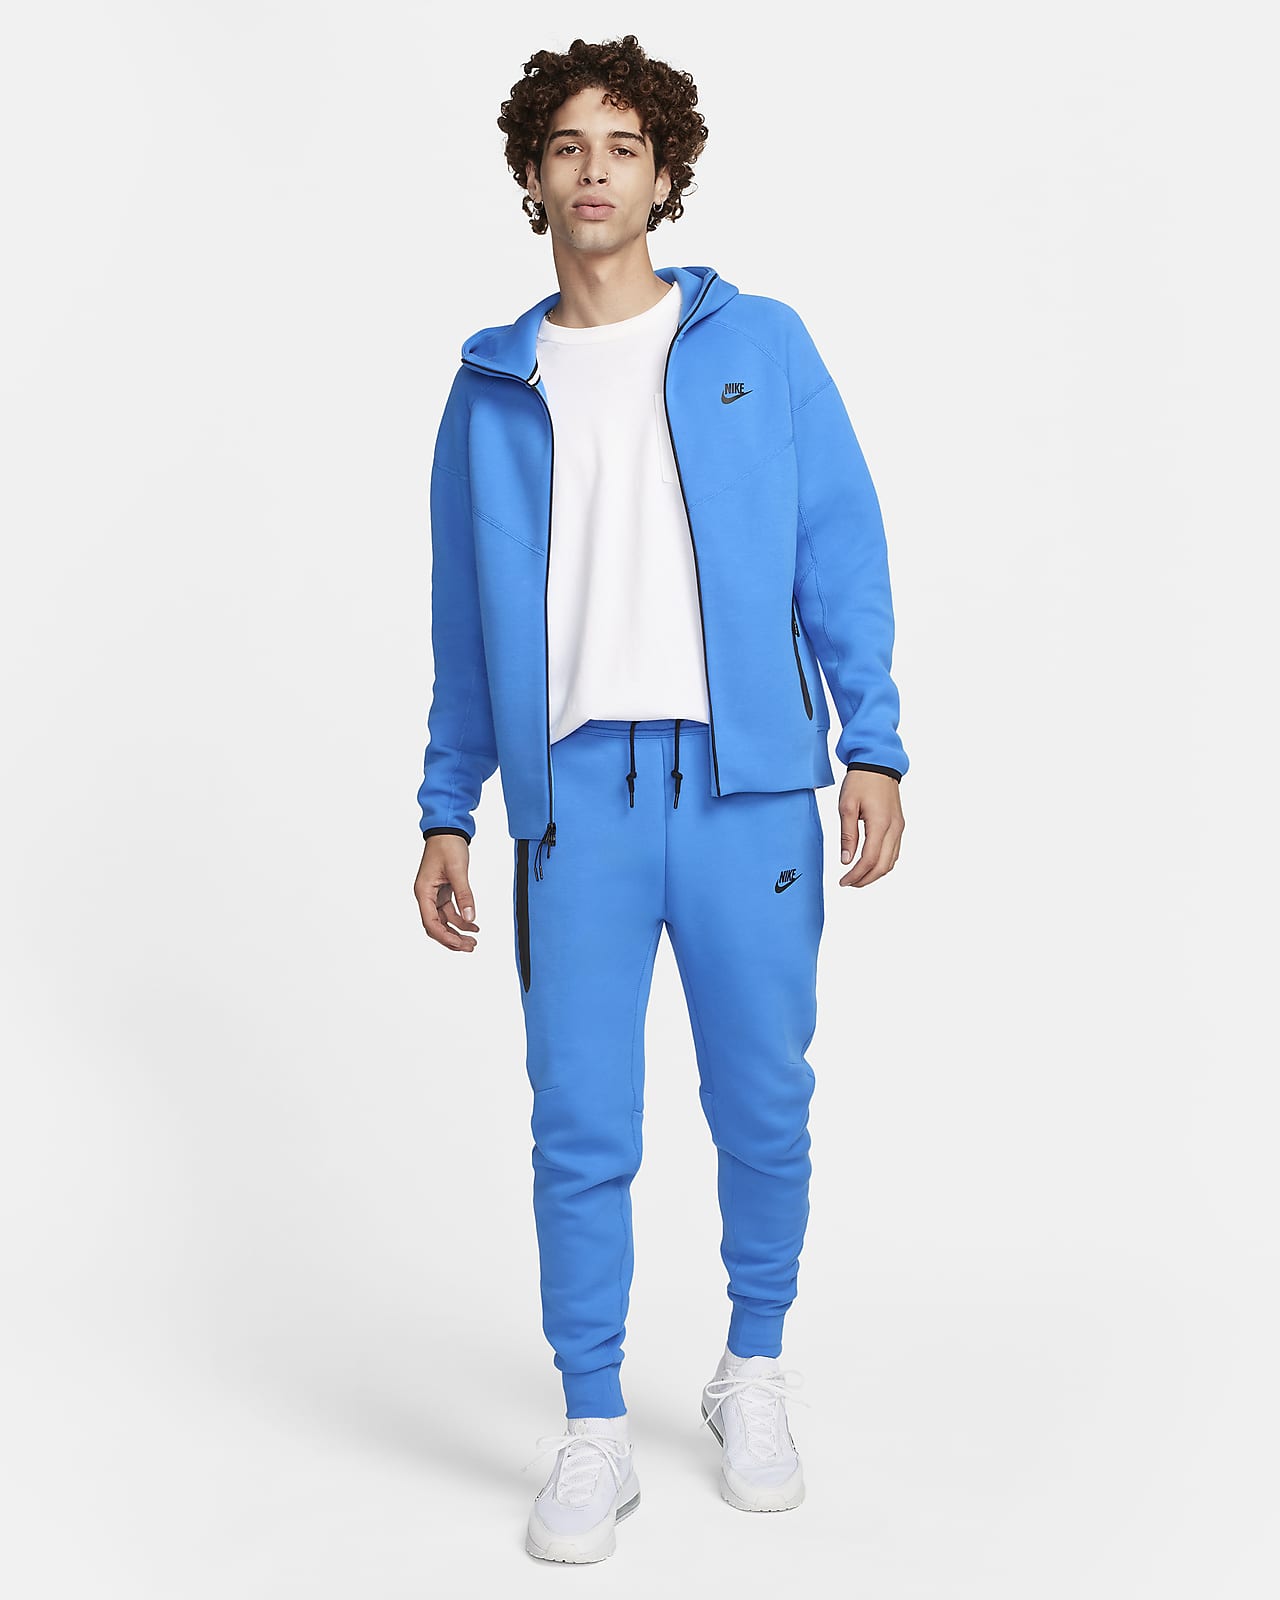 Nike TECH FLEECE WINDRUNNER HOODIE Gris - Vêtements Blousons Homme 86,40 €